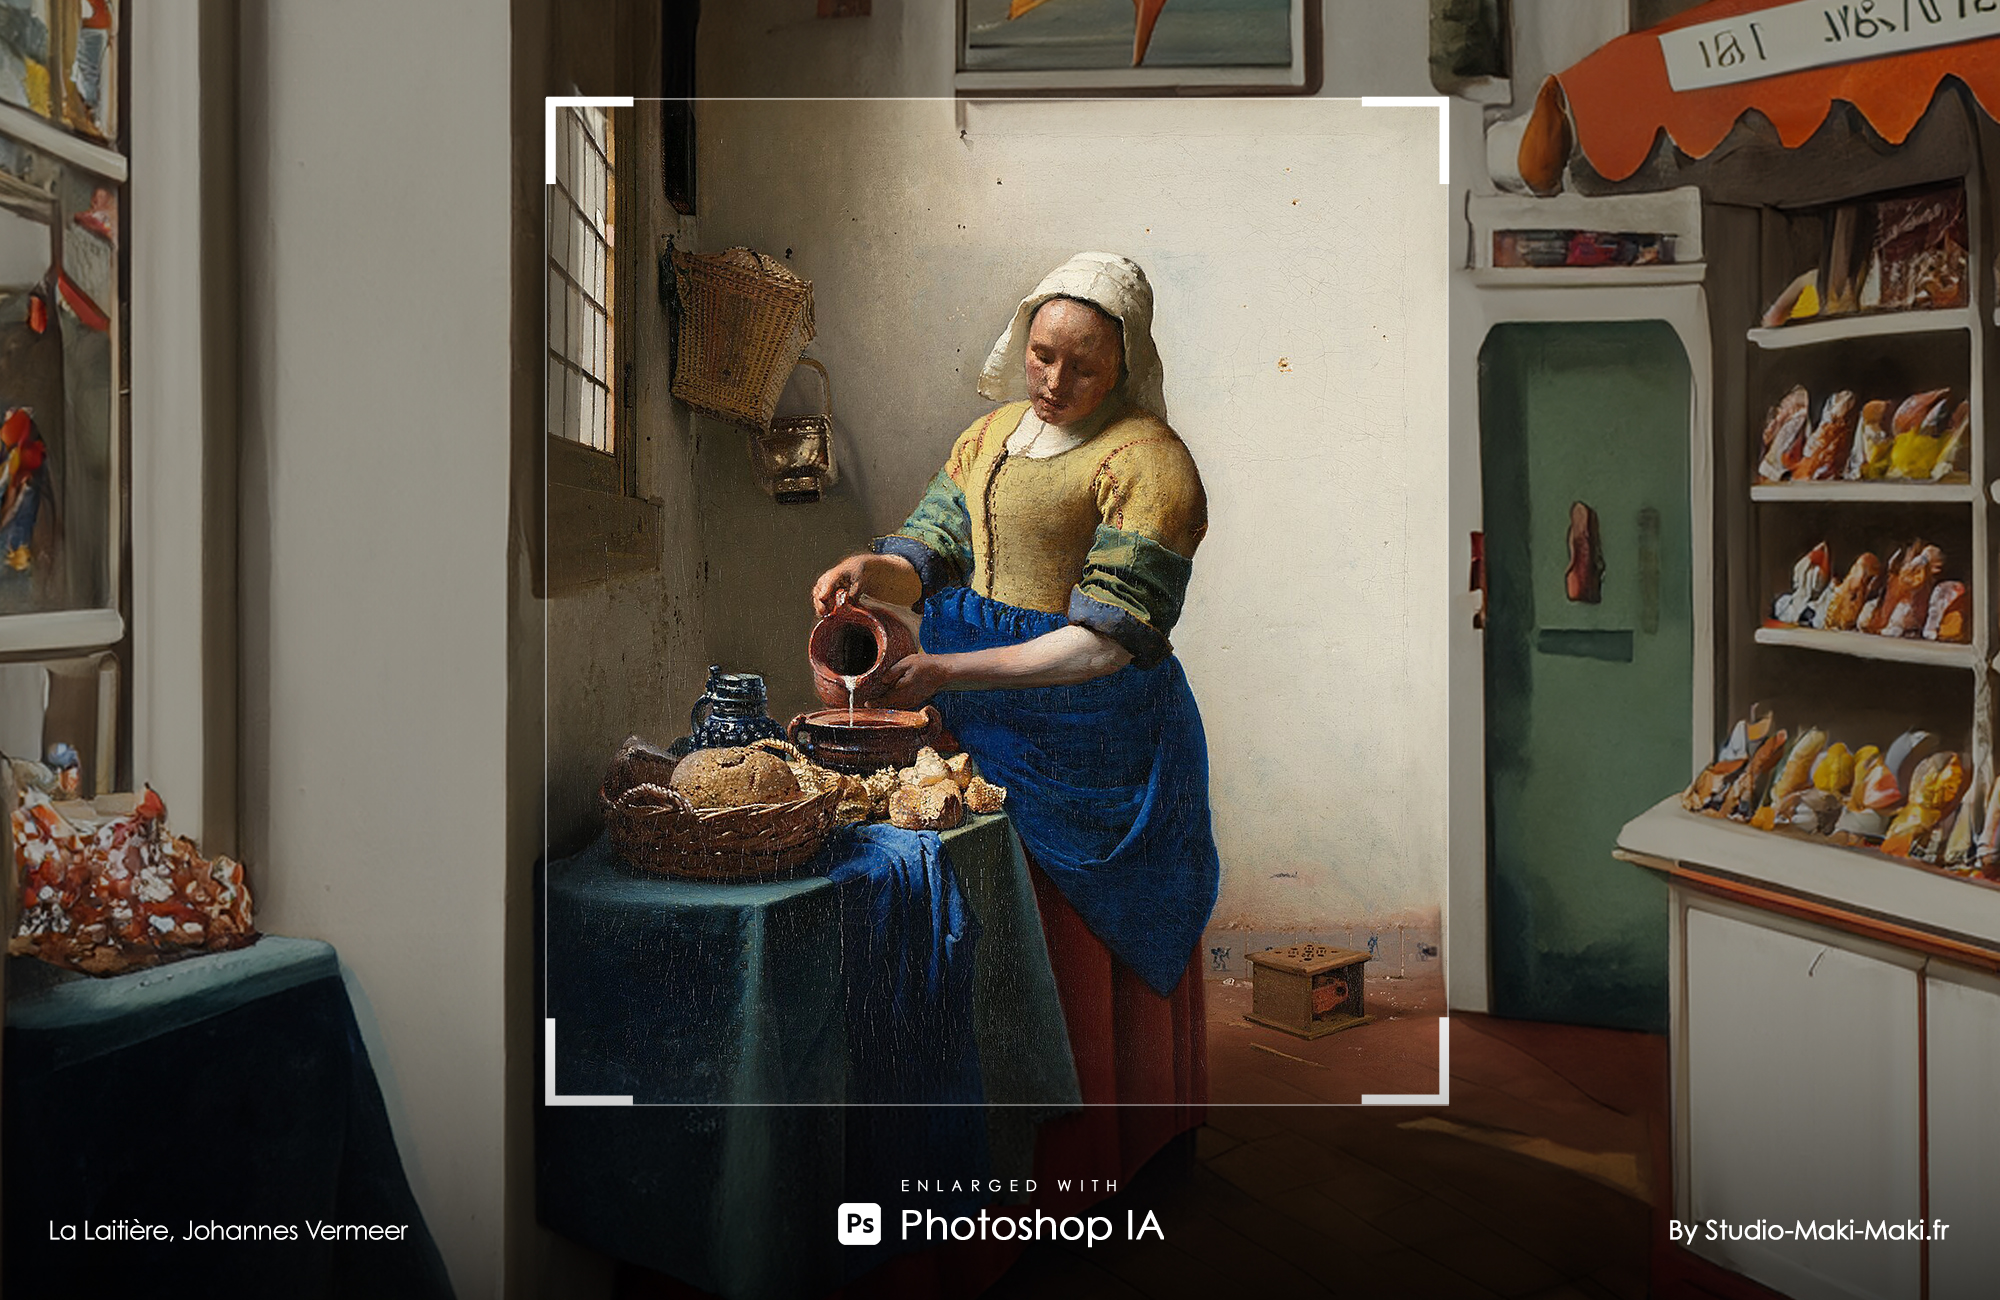 La Laitière, Johannes Vermeer - Enlarged with Photoshop IA - By Studio Maki Maki